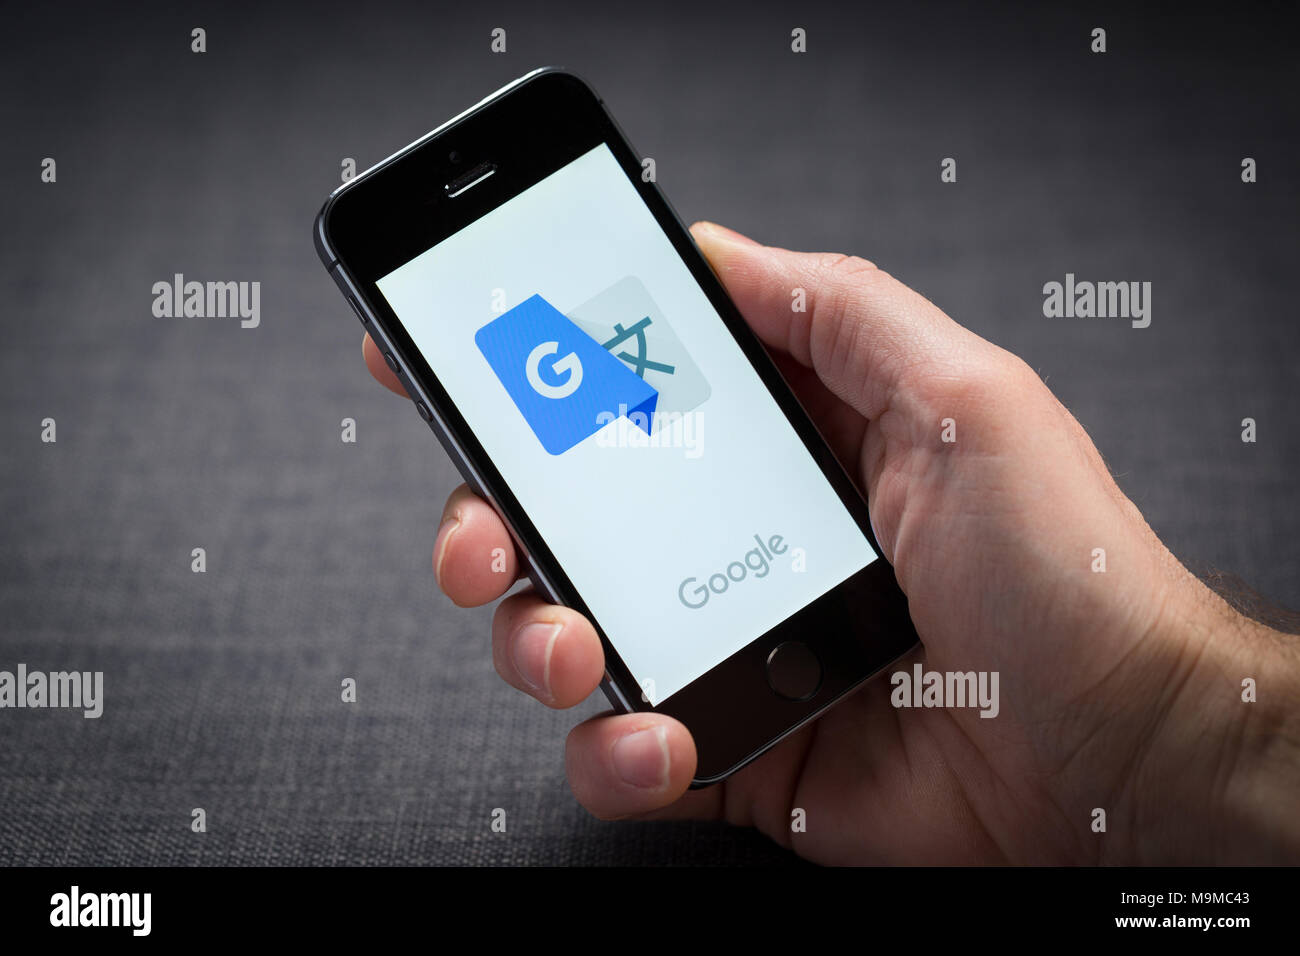 google translate app on iphone